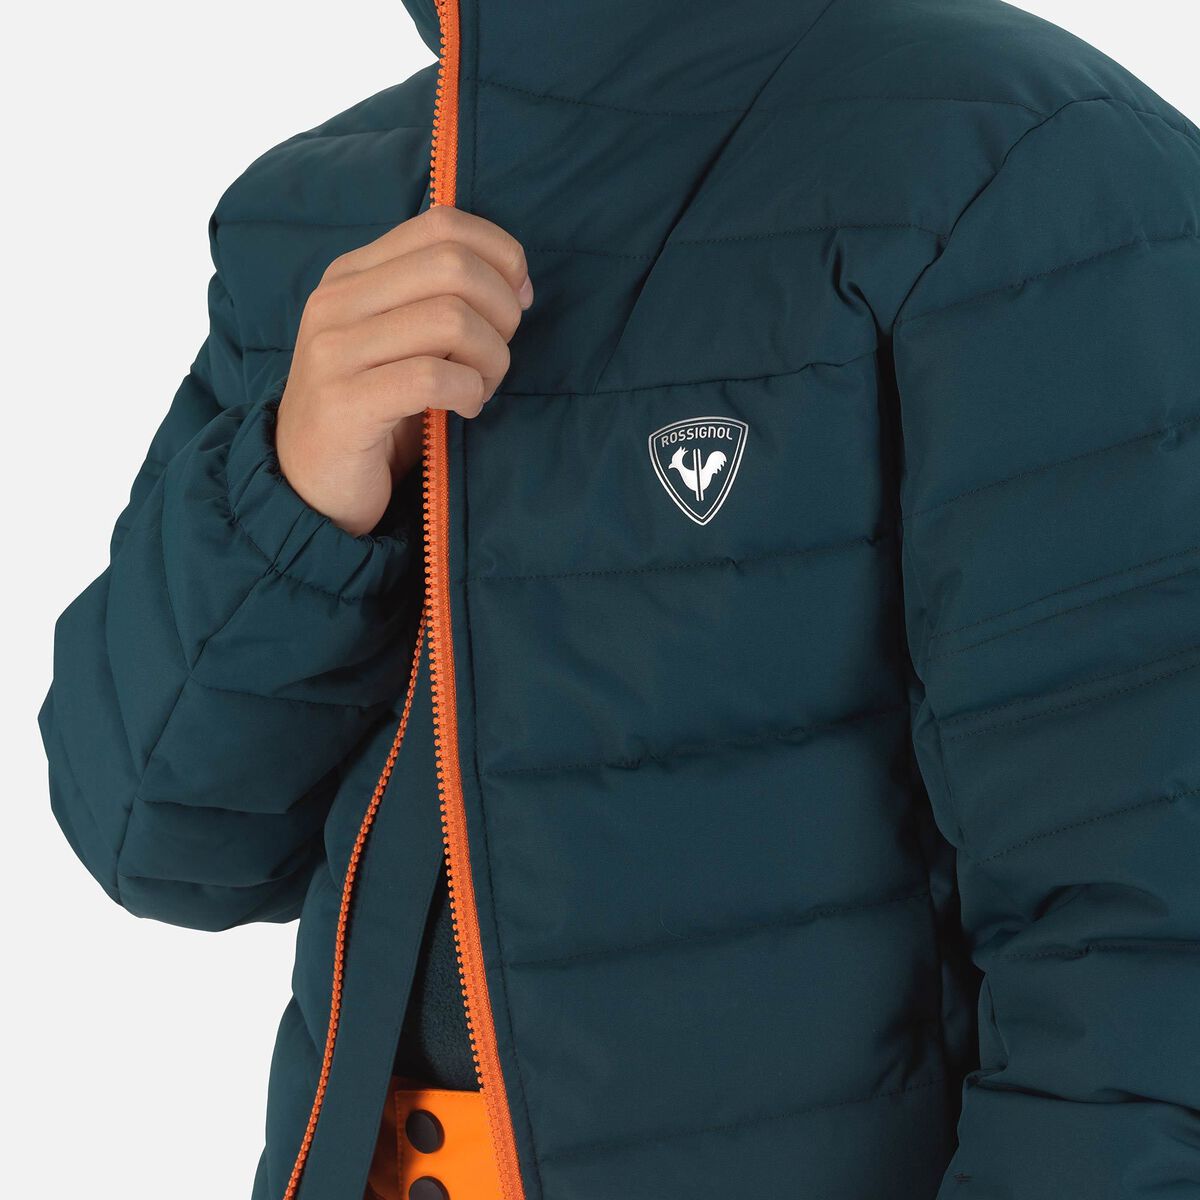 Boys' Rapide Ski Jacket